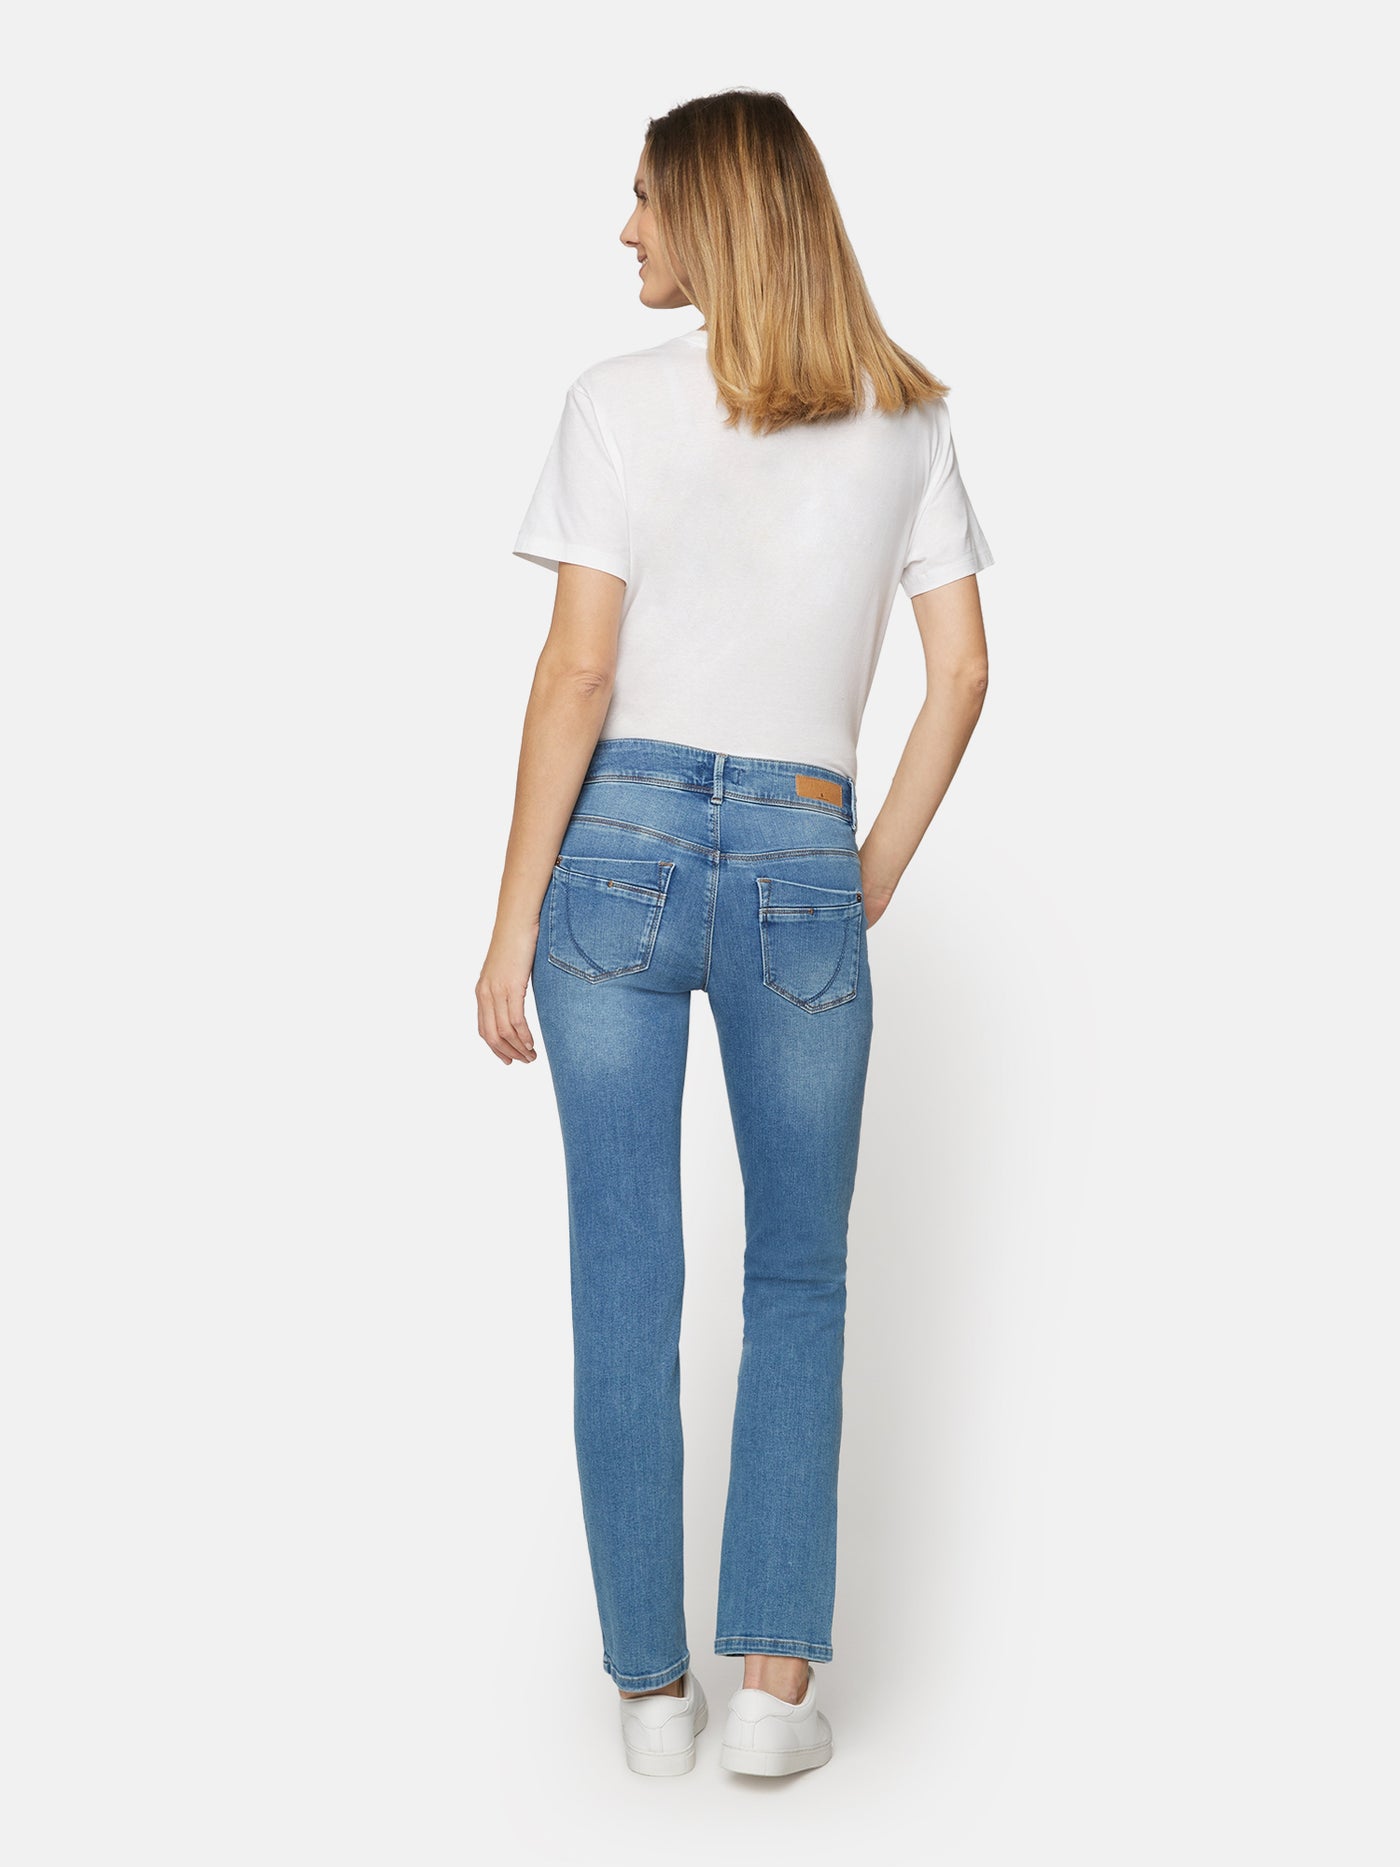 Jeans Hannah Straight Legs - Light Blue Denim